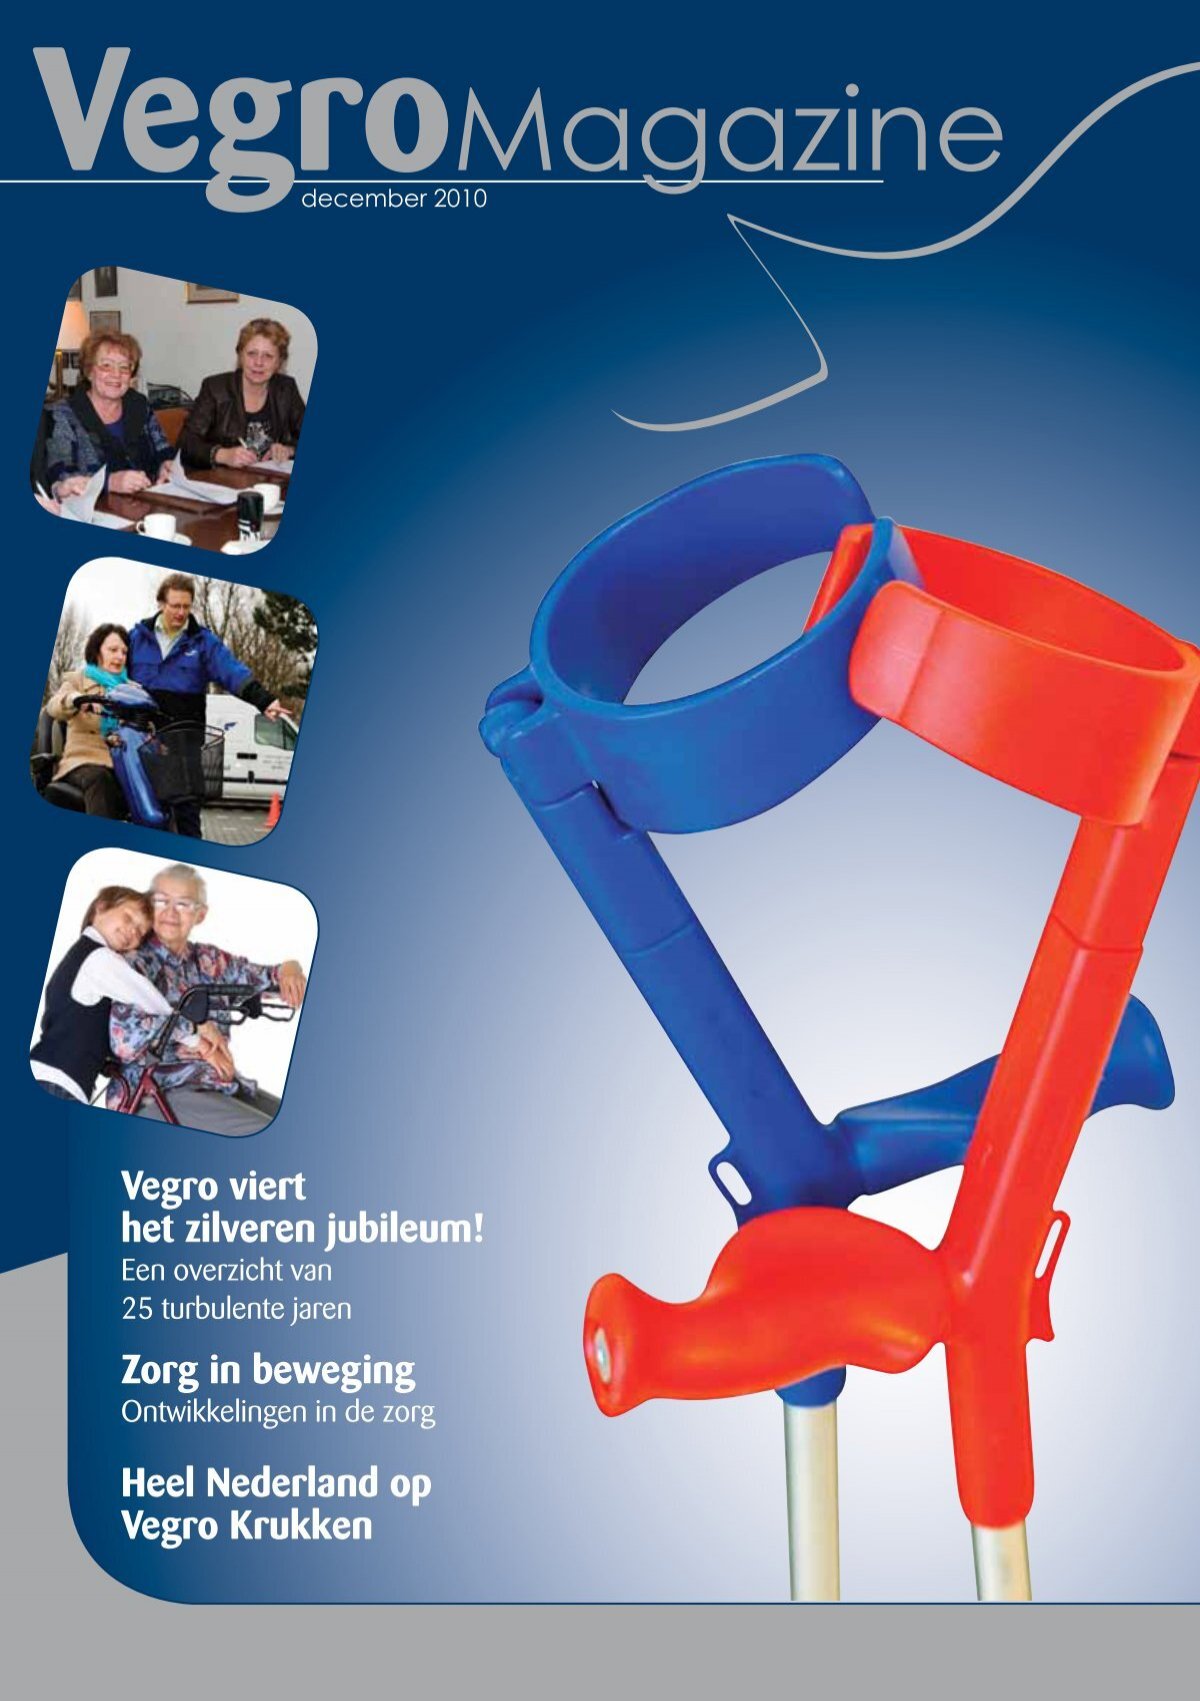 Vegro magazine SupportBeurs.nl